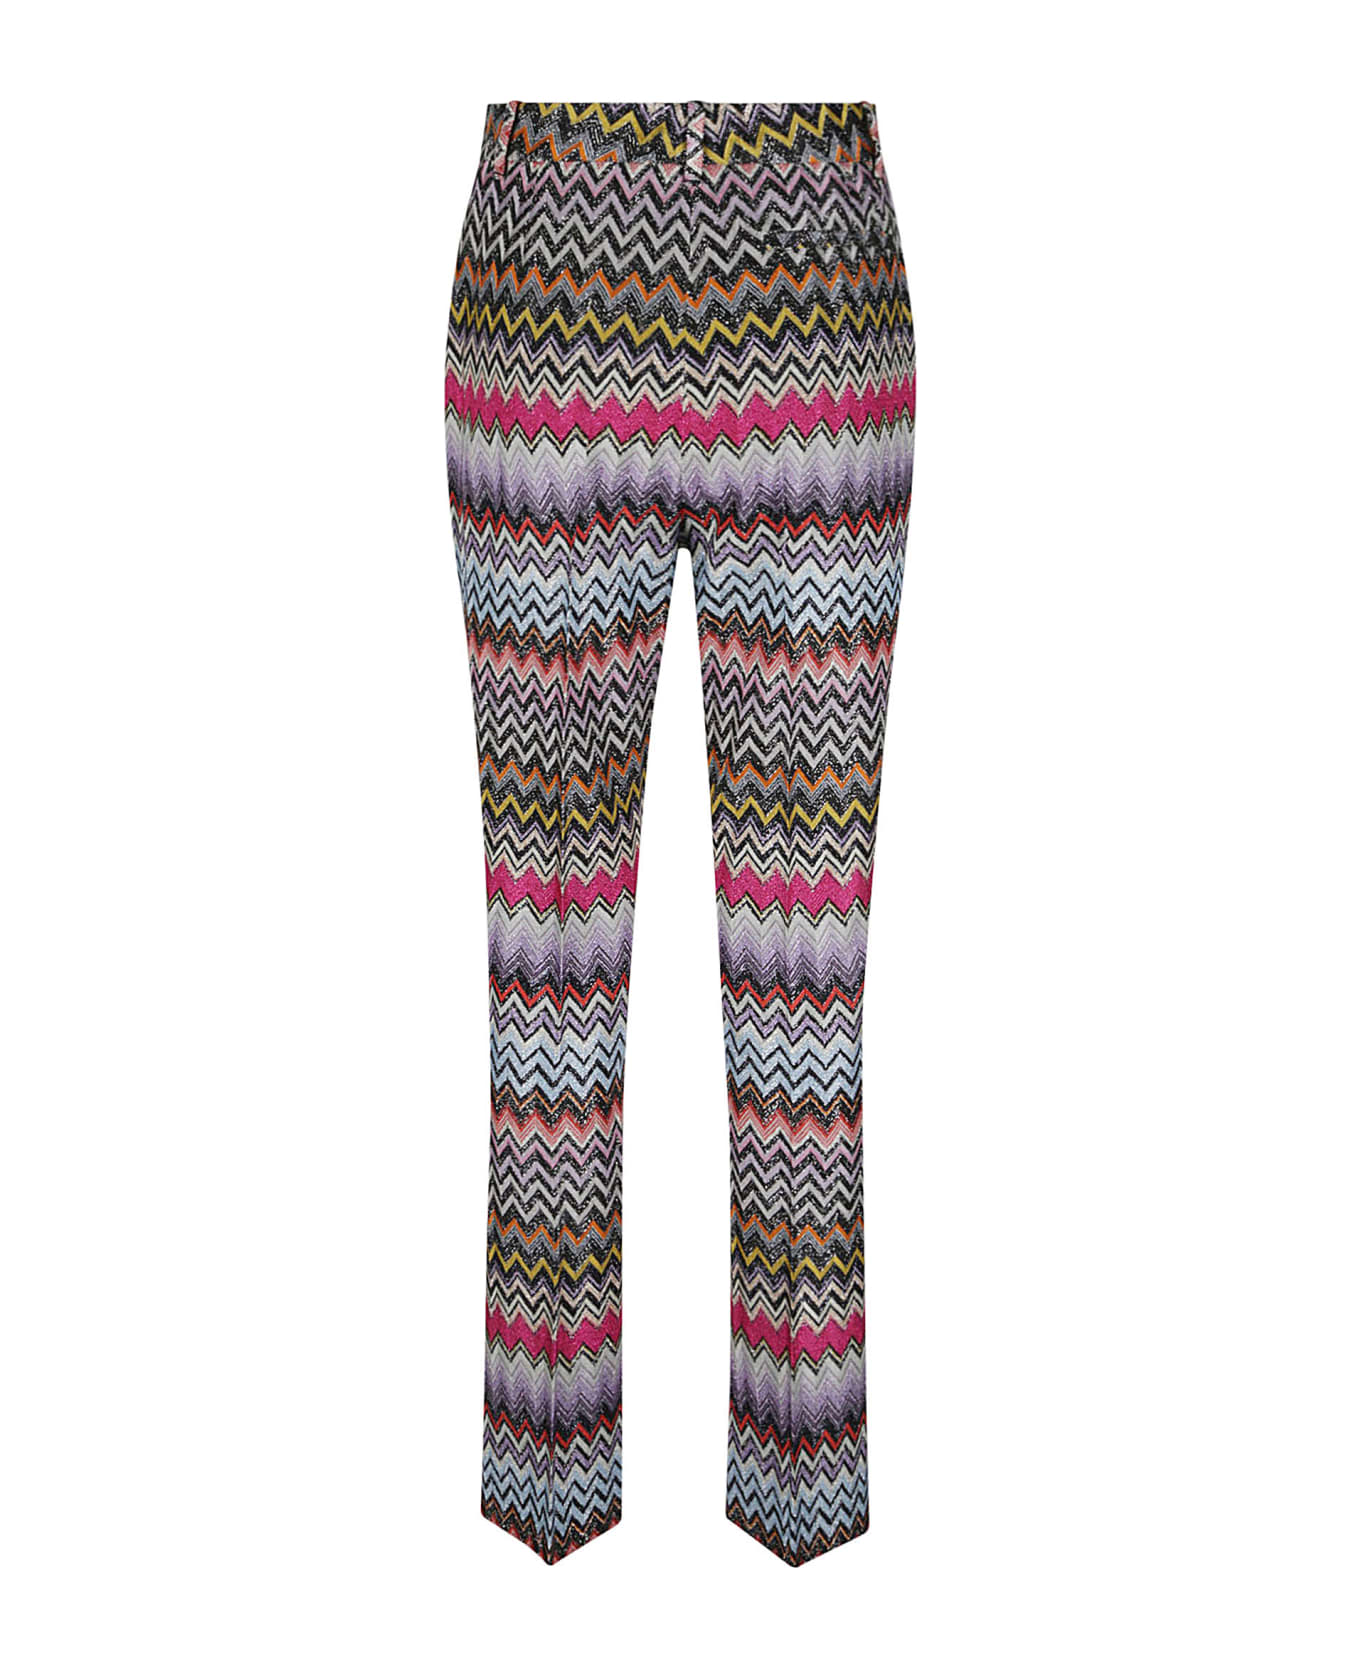 Missoni Zigzag Print Trousers - Multicolor ボトムス